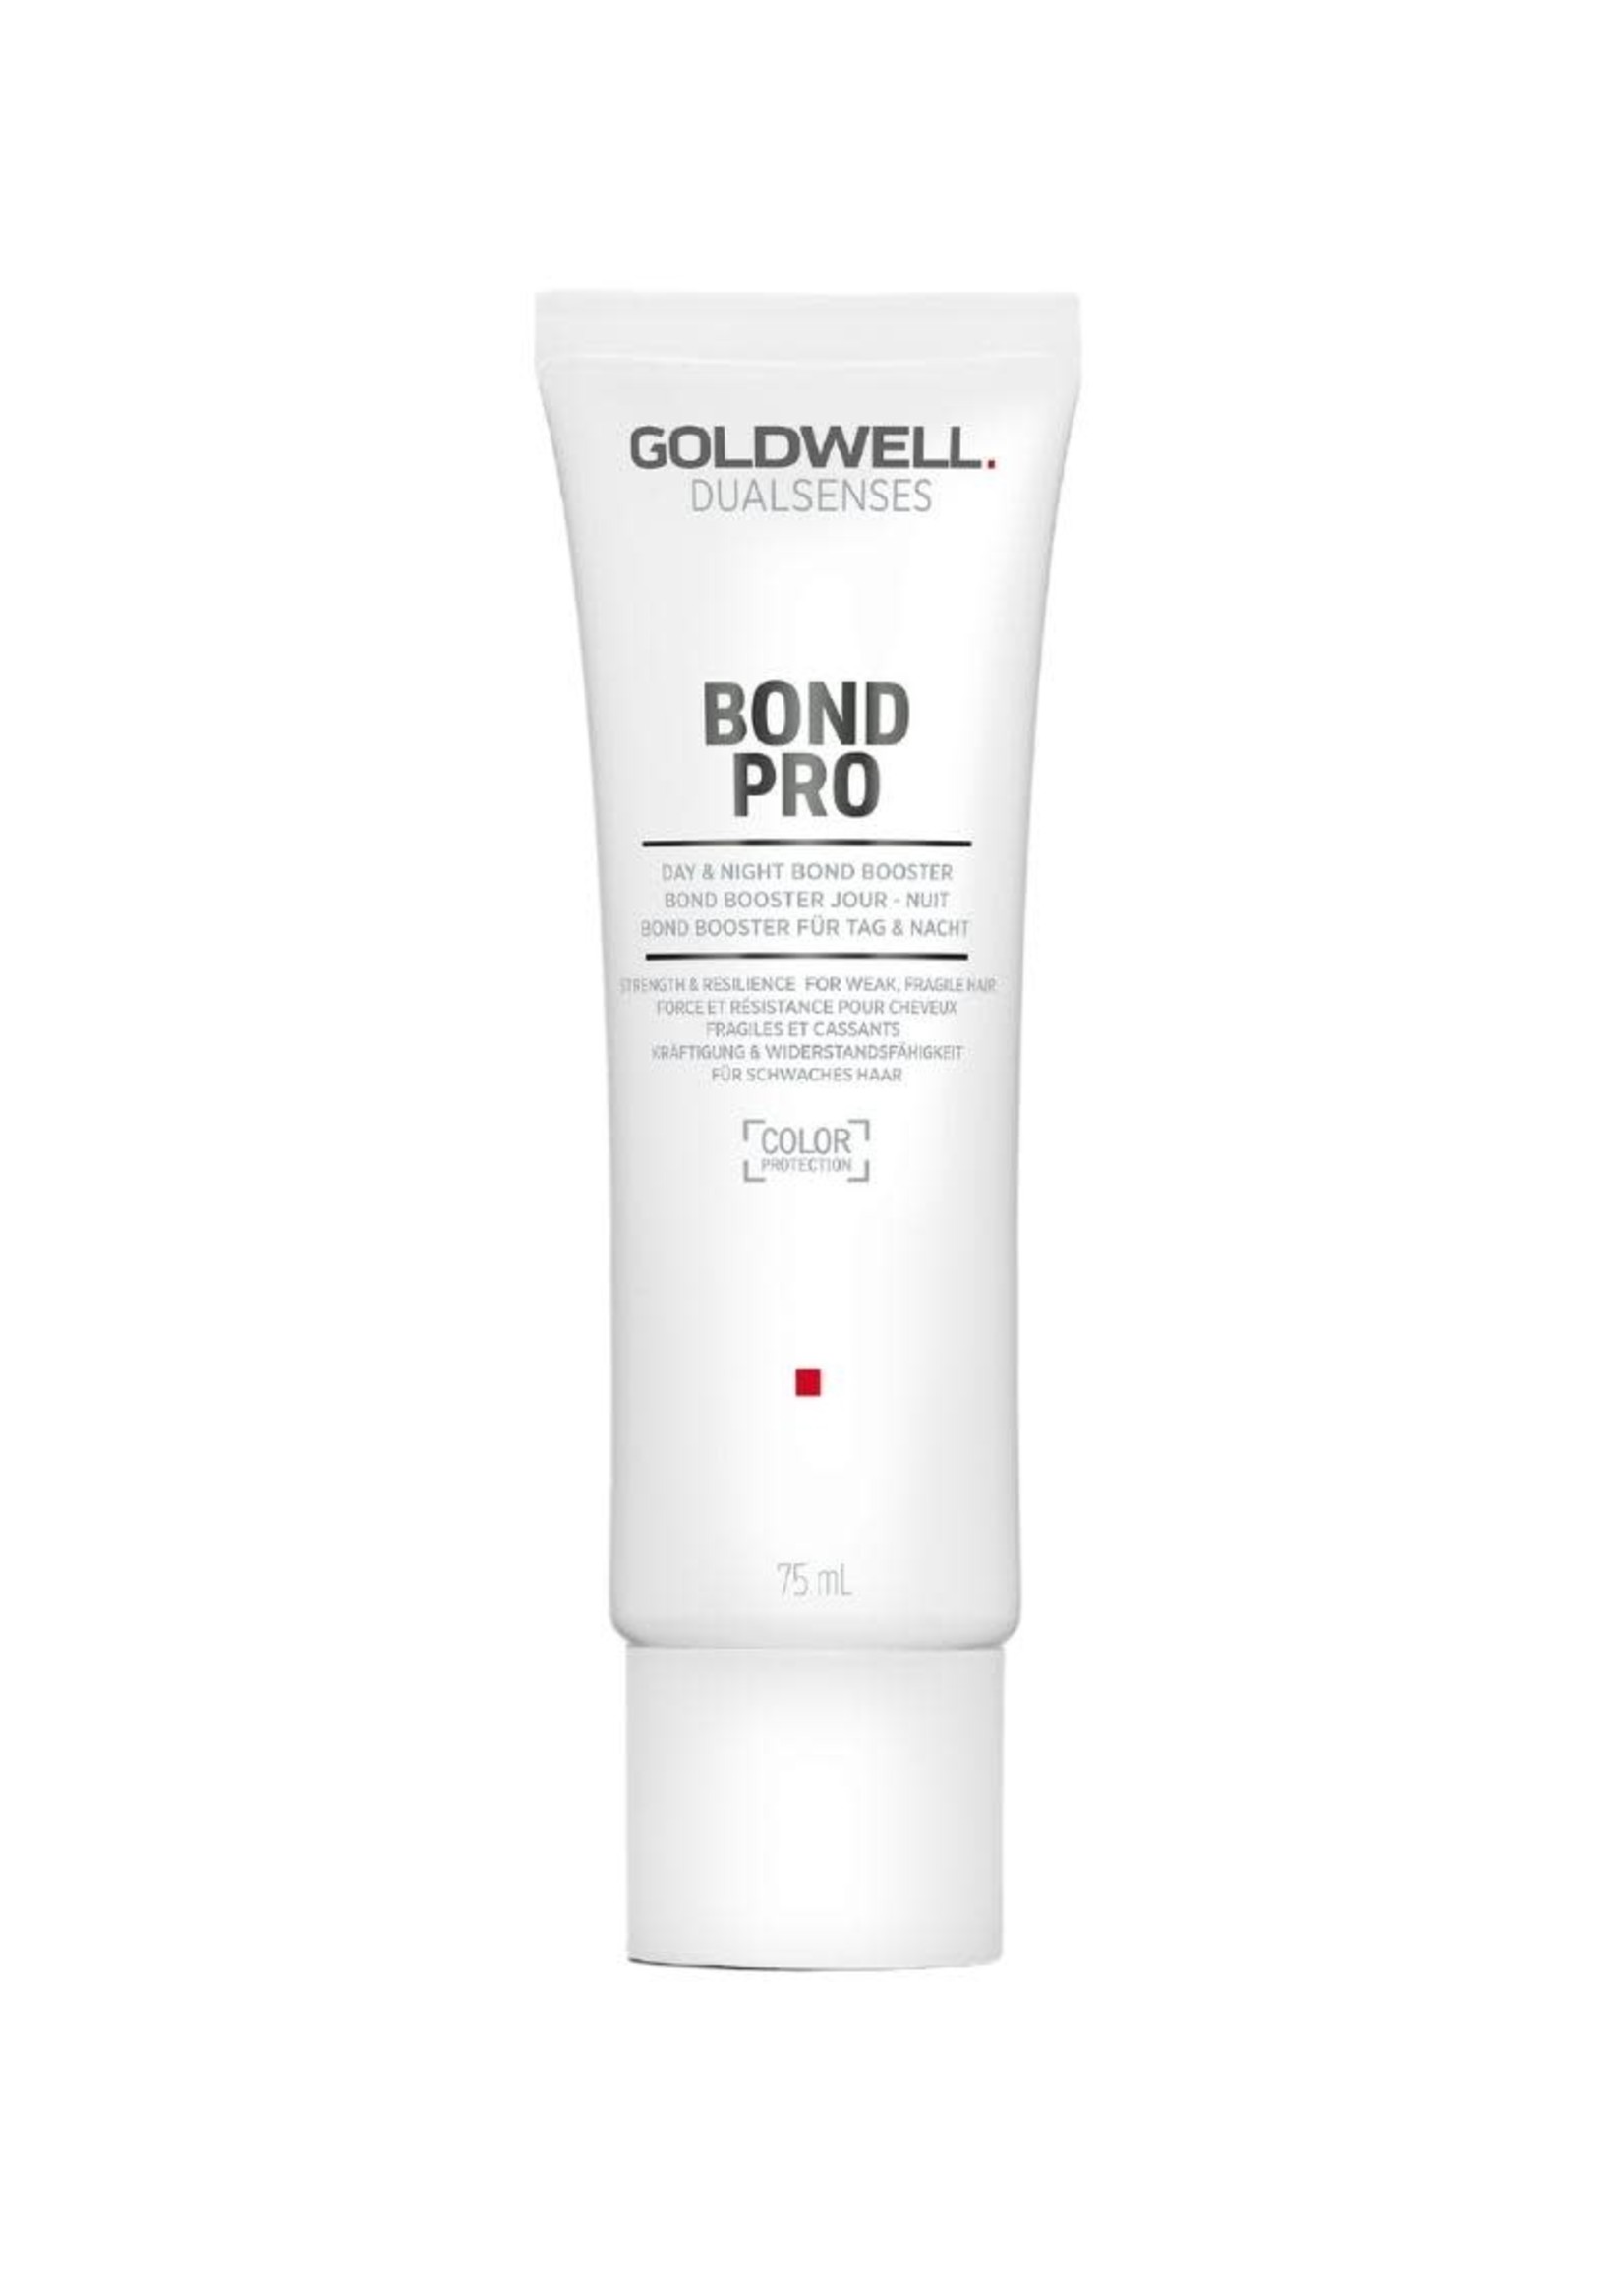 Goldwell Goldwell Dualsenses Bond Pro Day & Night Bond Booster 75ml